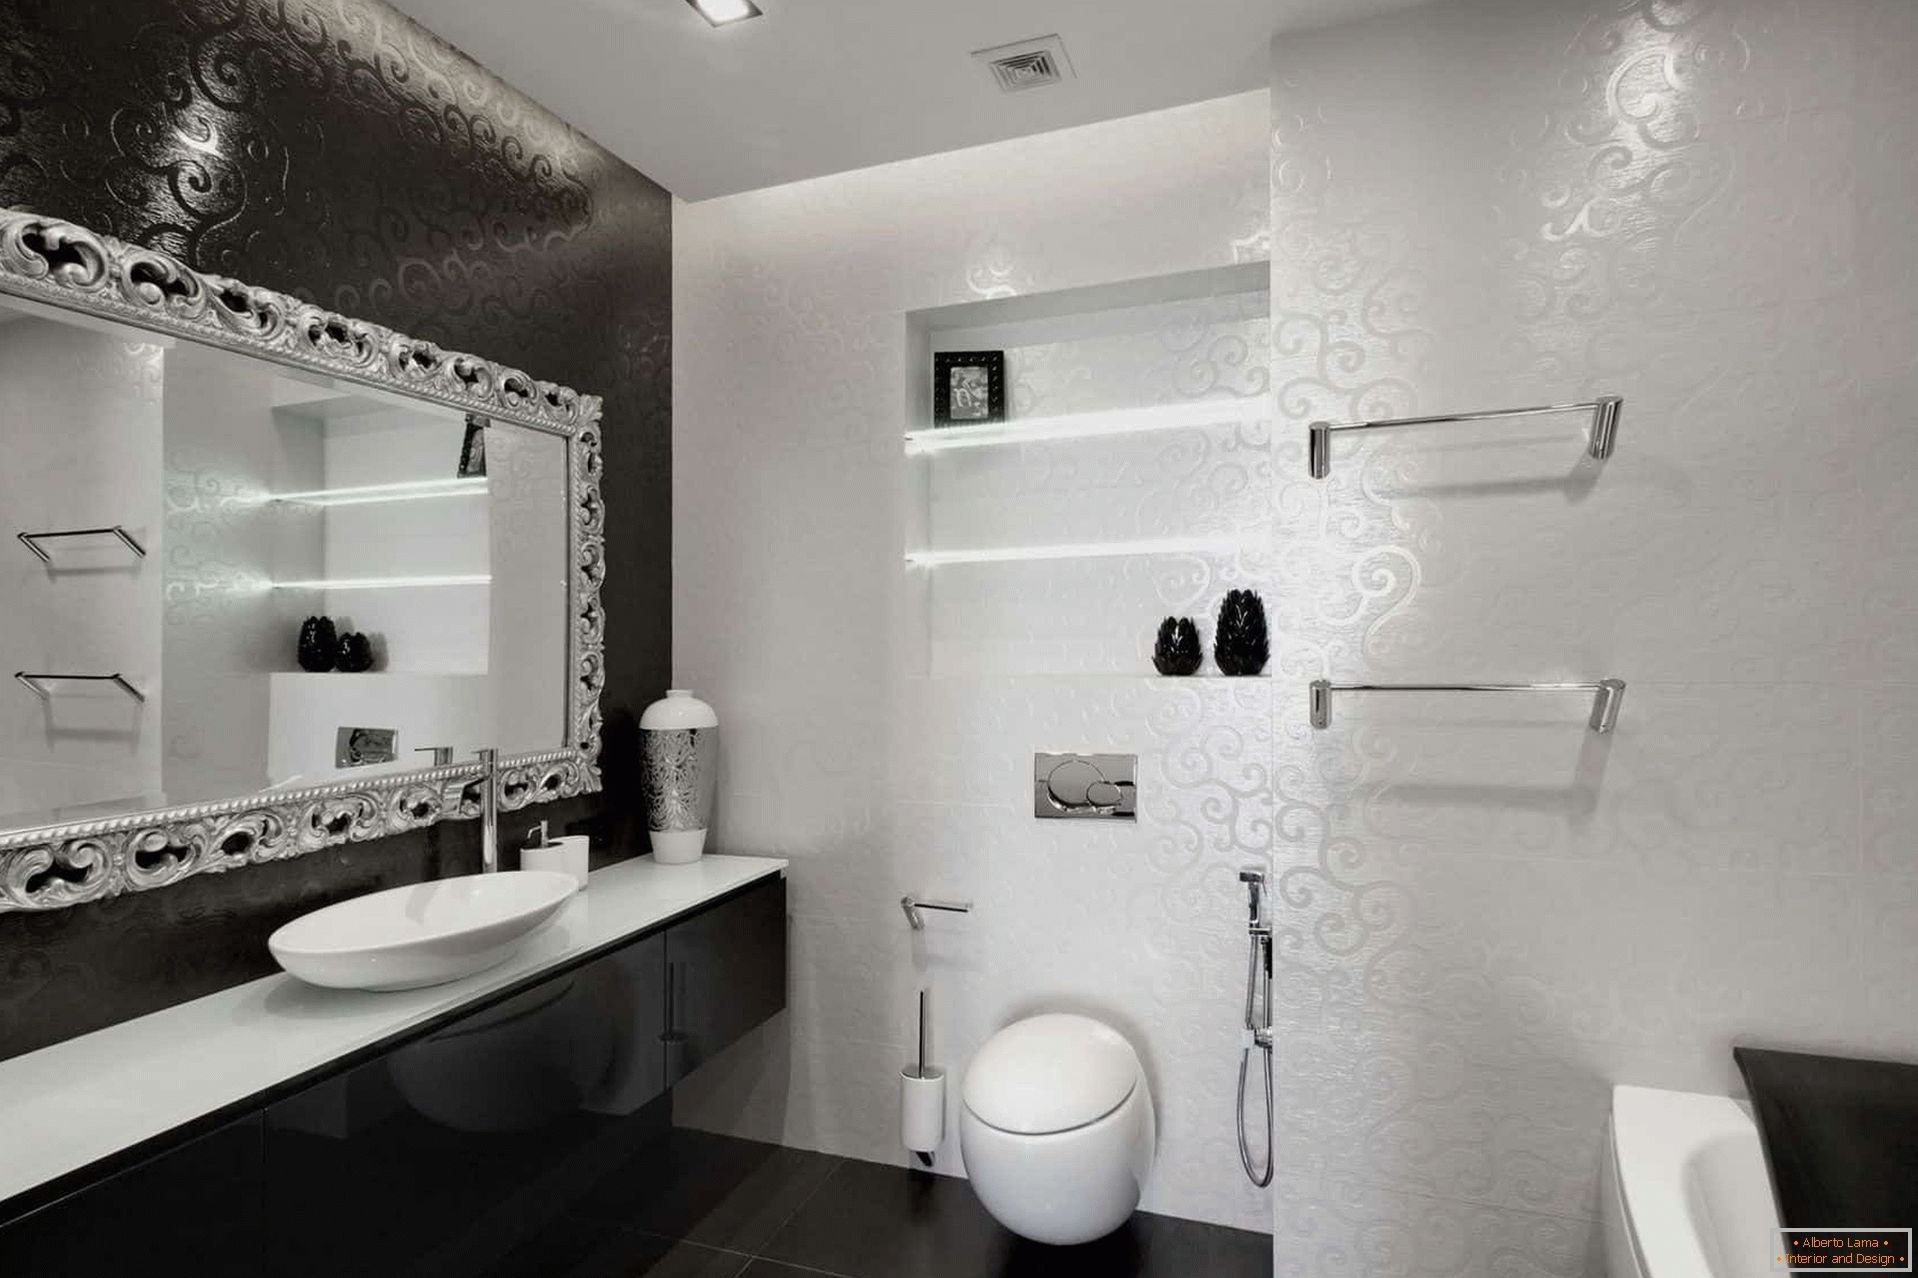 Black and white bathroom with bath